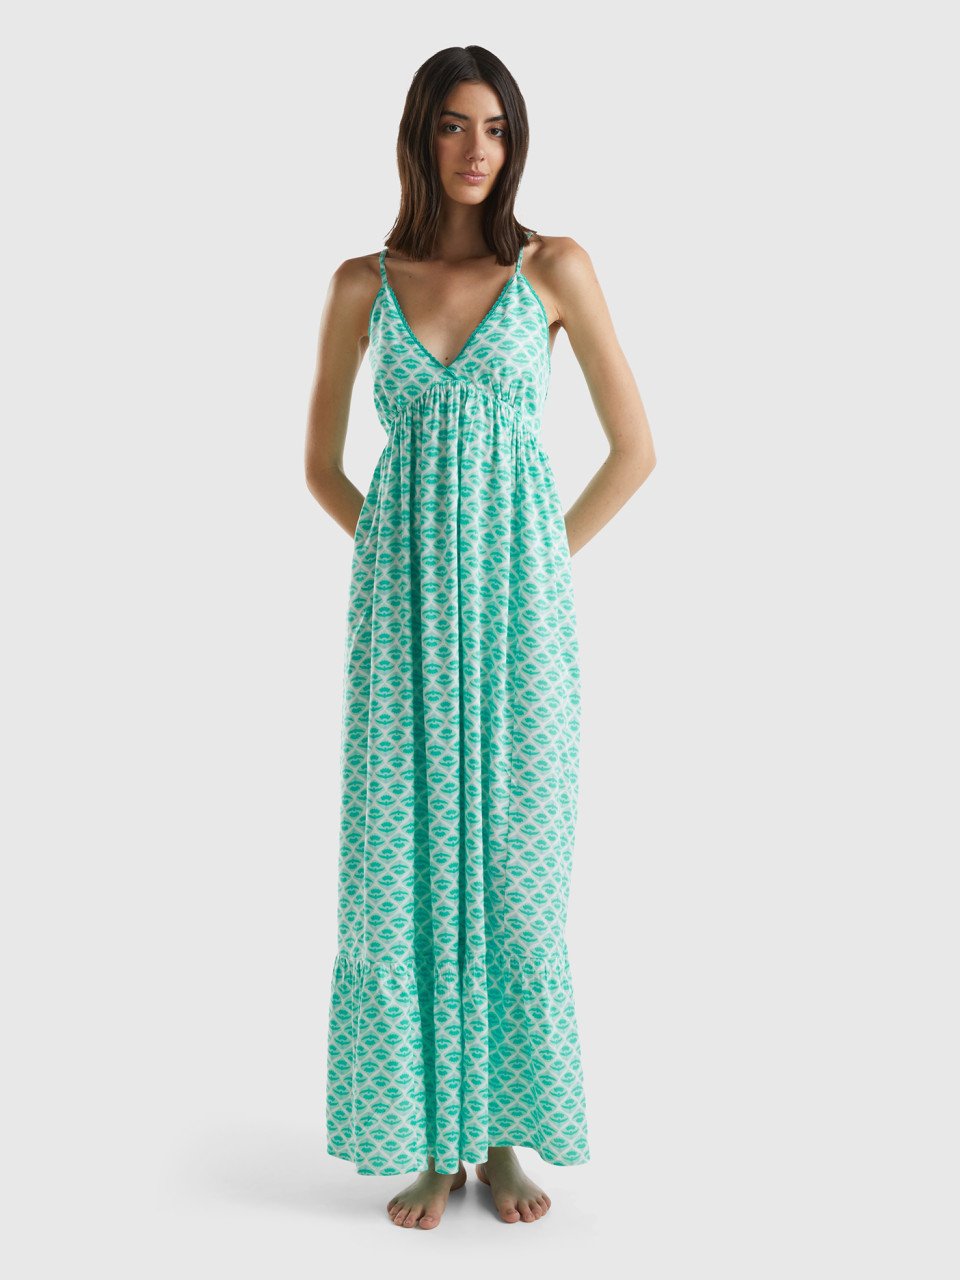 Benetton, Dress With Floral Print, Aqua, Women